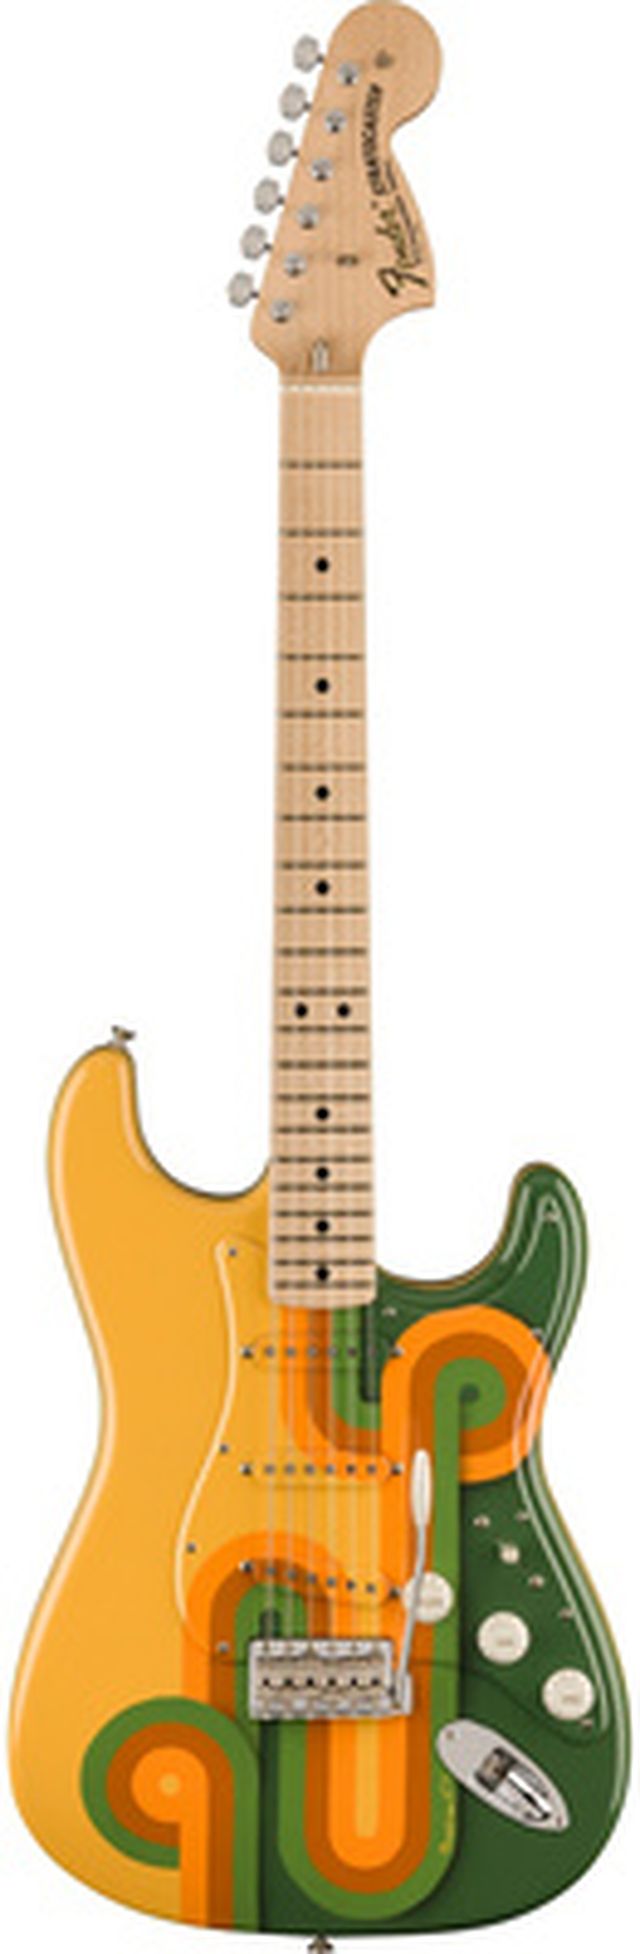 Fender Custom Groovy Strat NOS